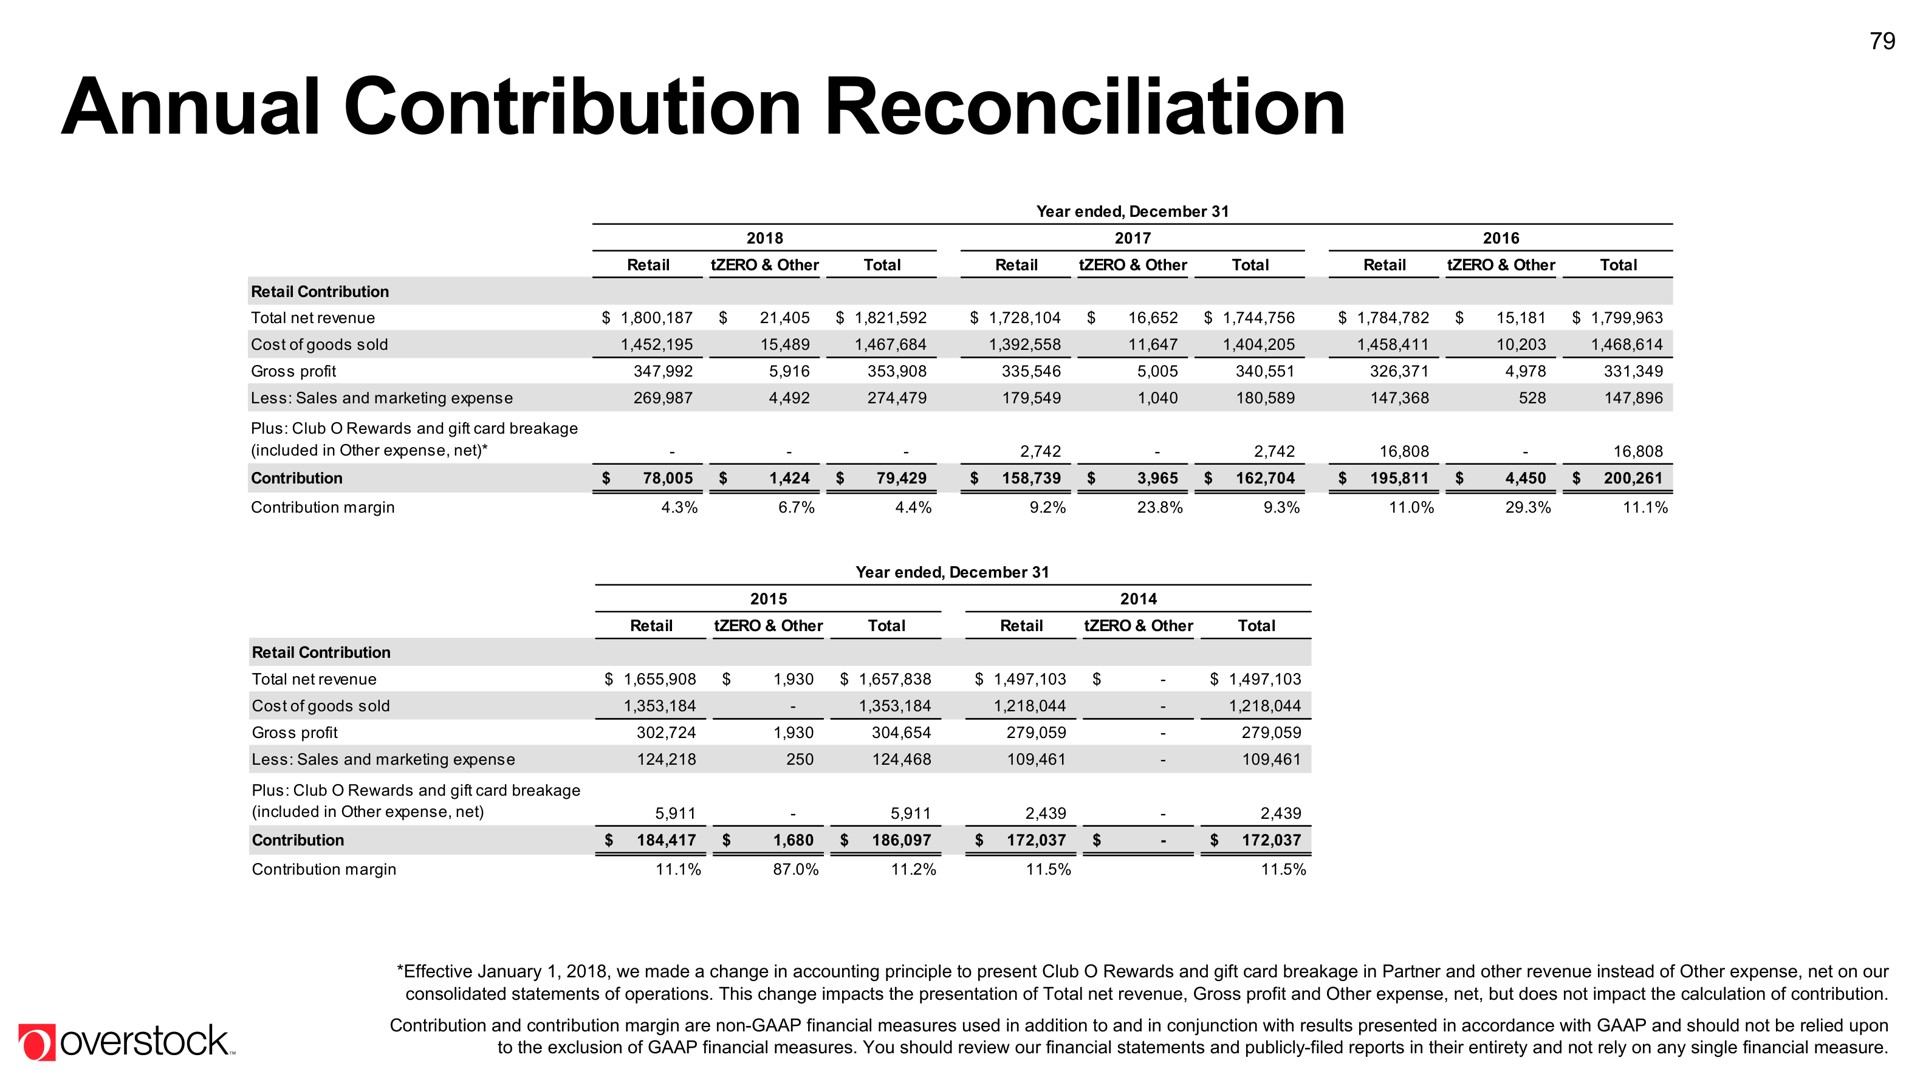 annual contribution reconciliation | Overstock